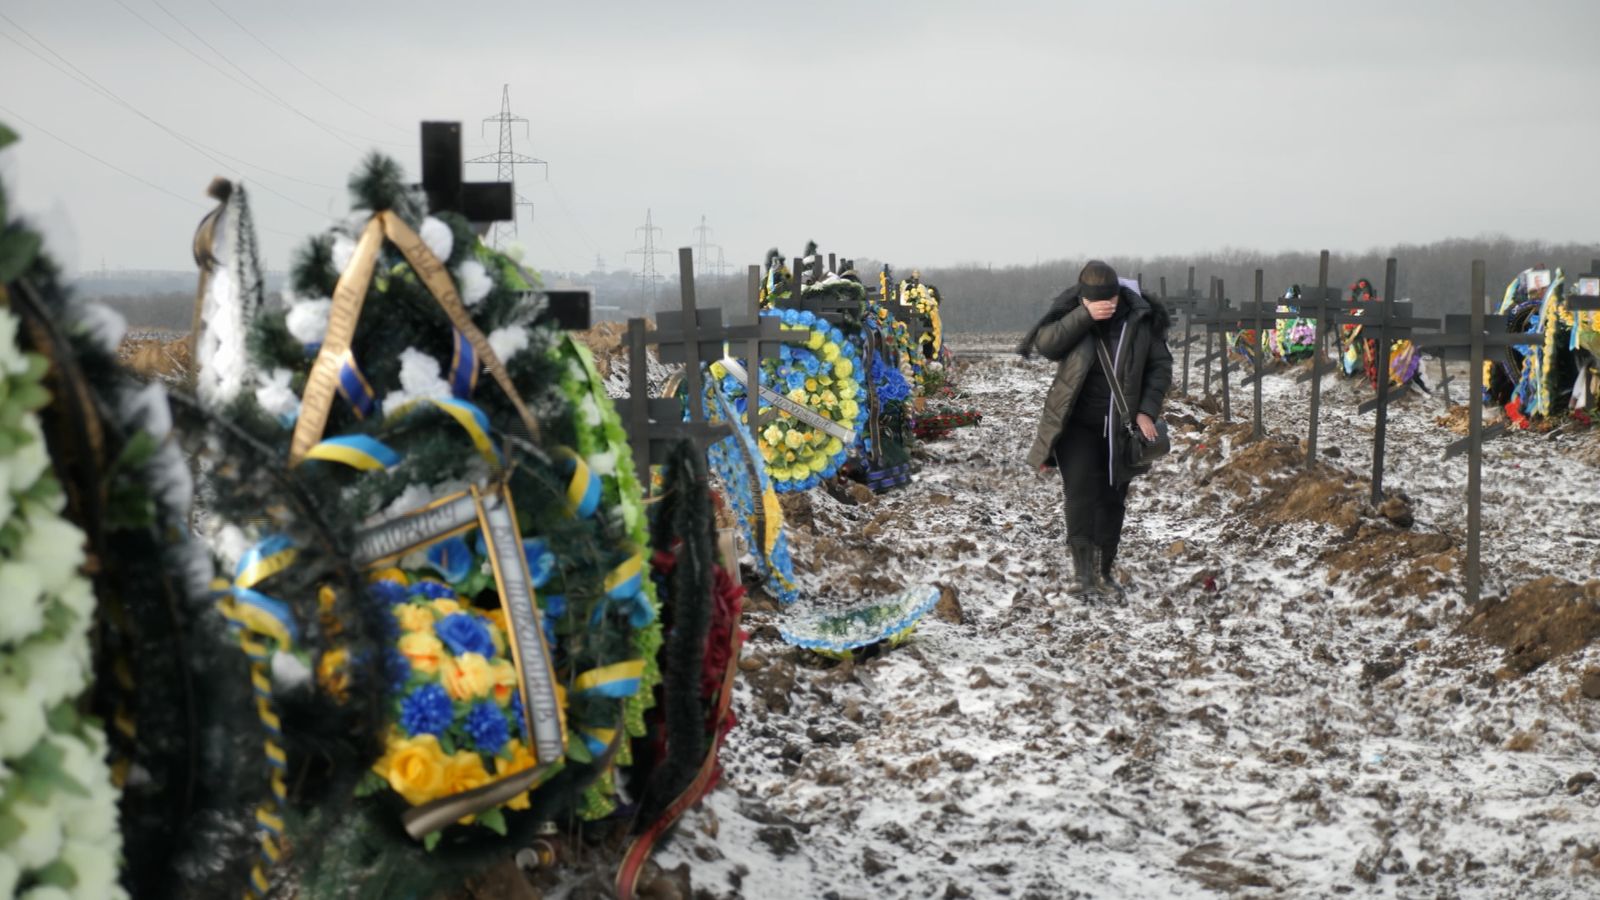 'It's not life, it's just hell': Grief-stricken Ukrainians still determined after a year of war